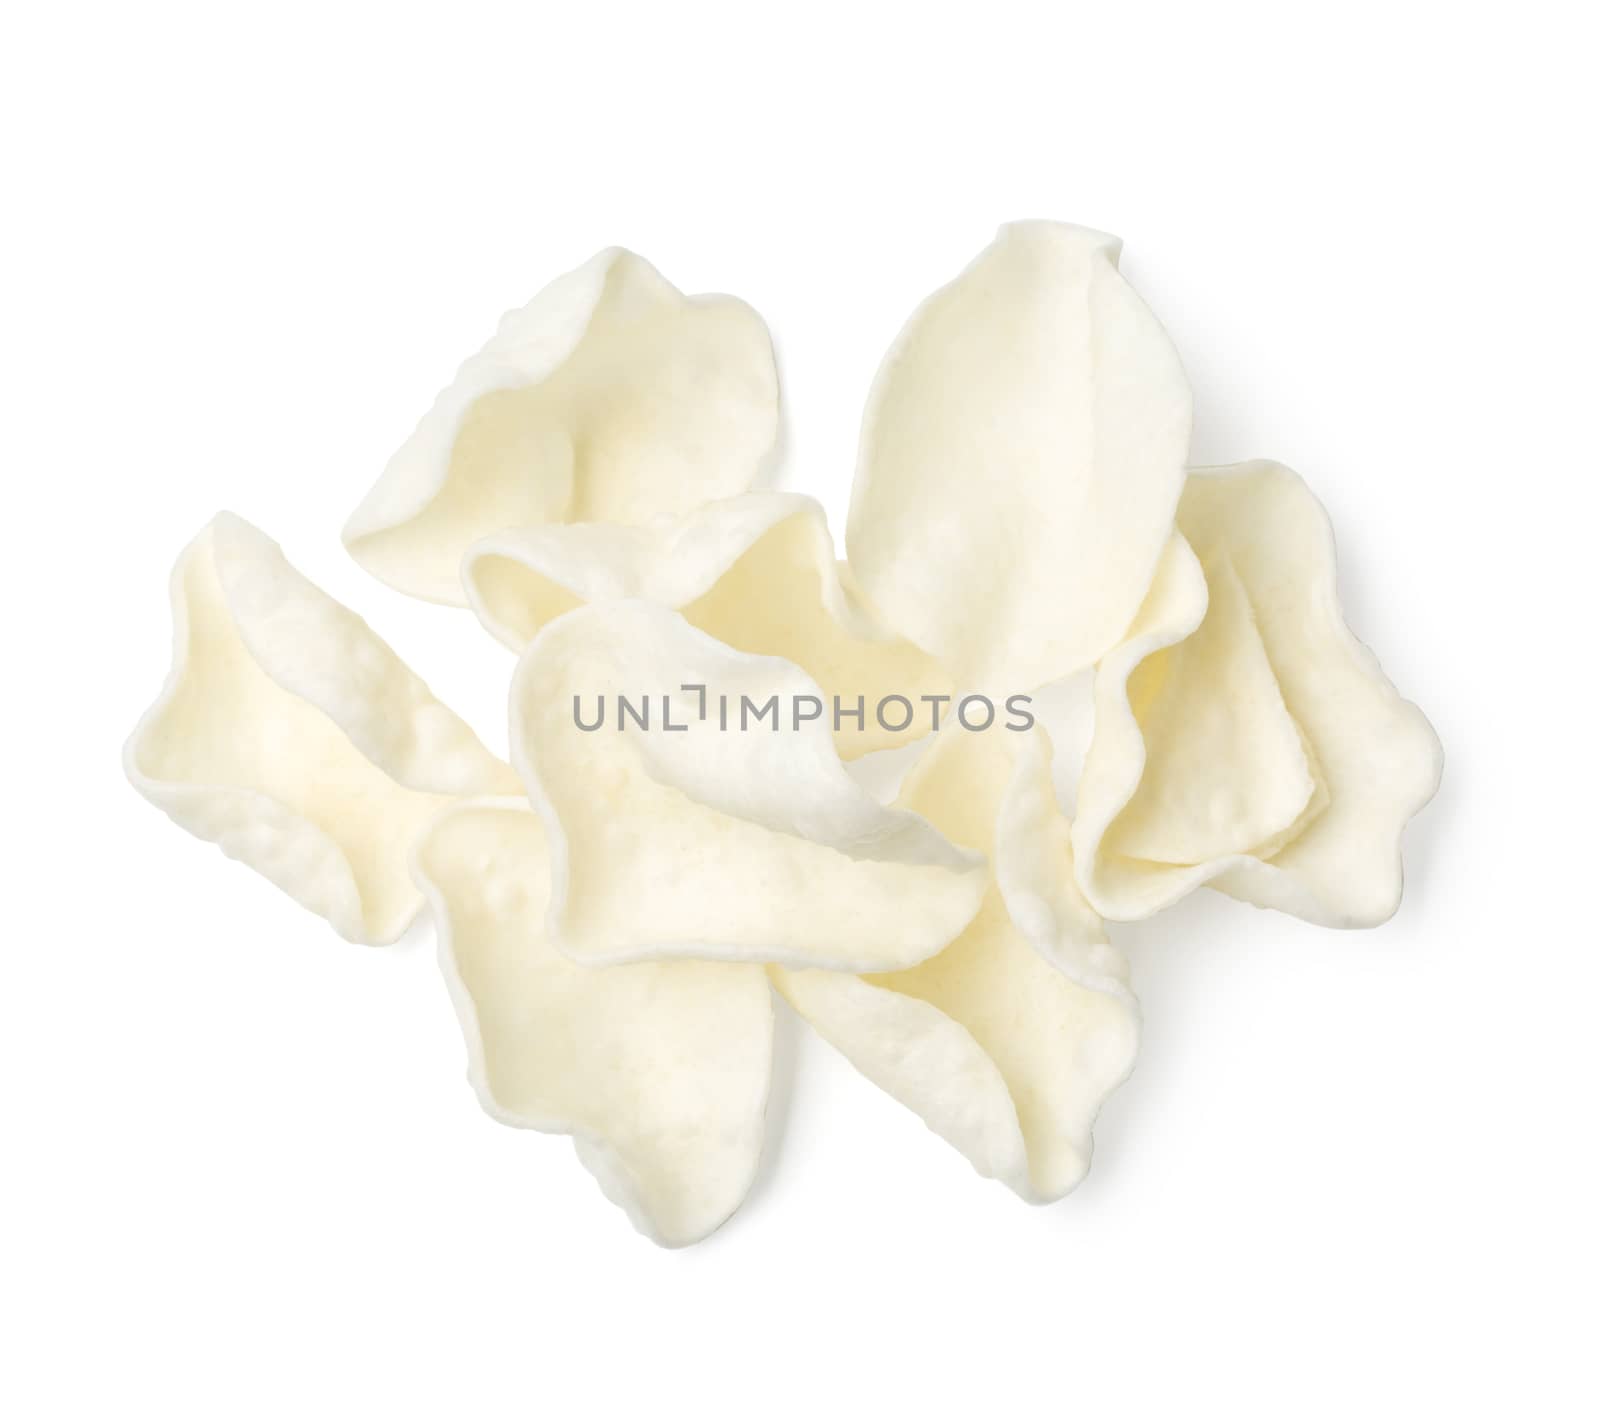  White Potato chips  by kornienko